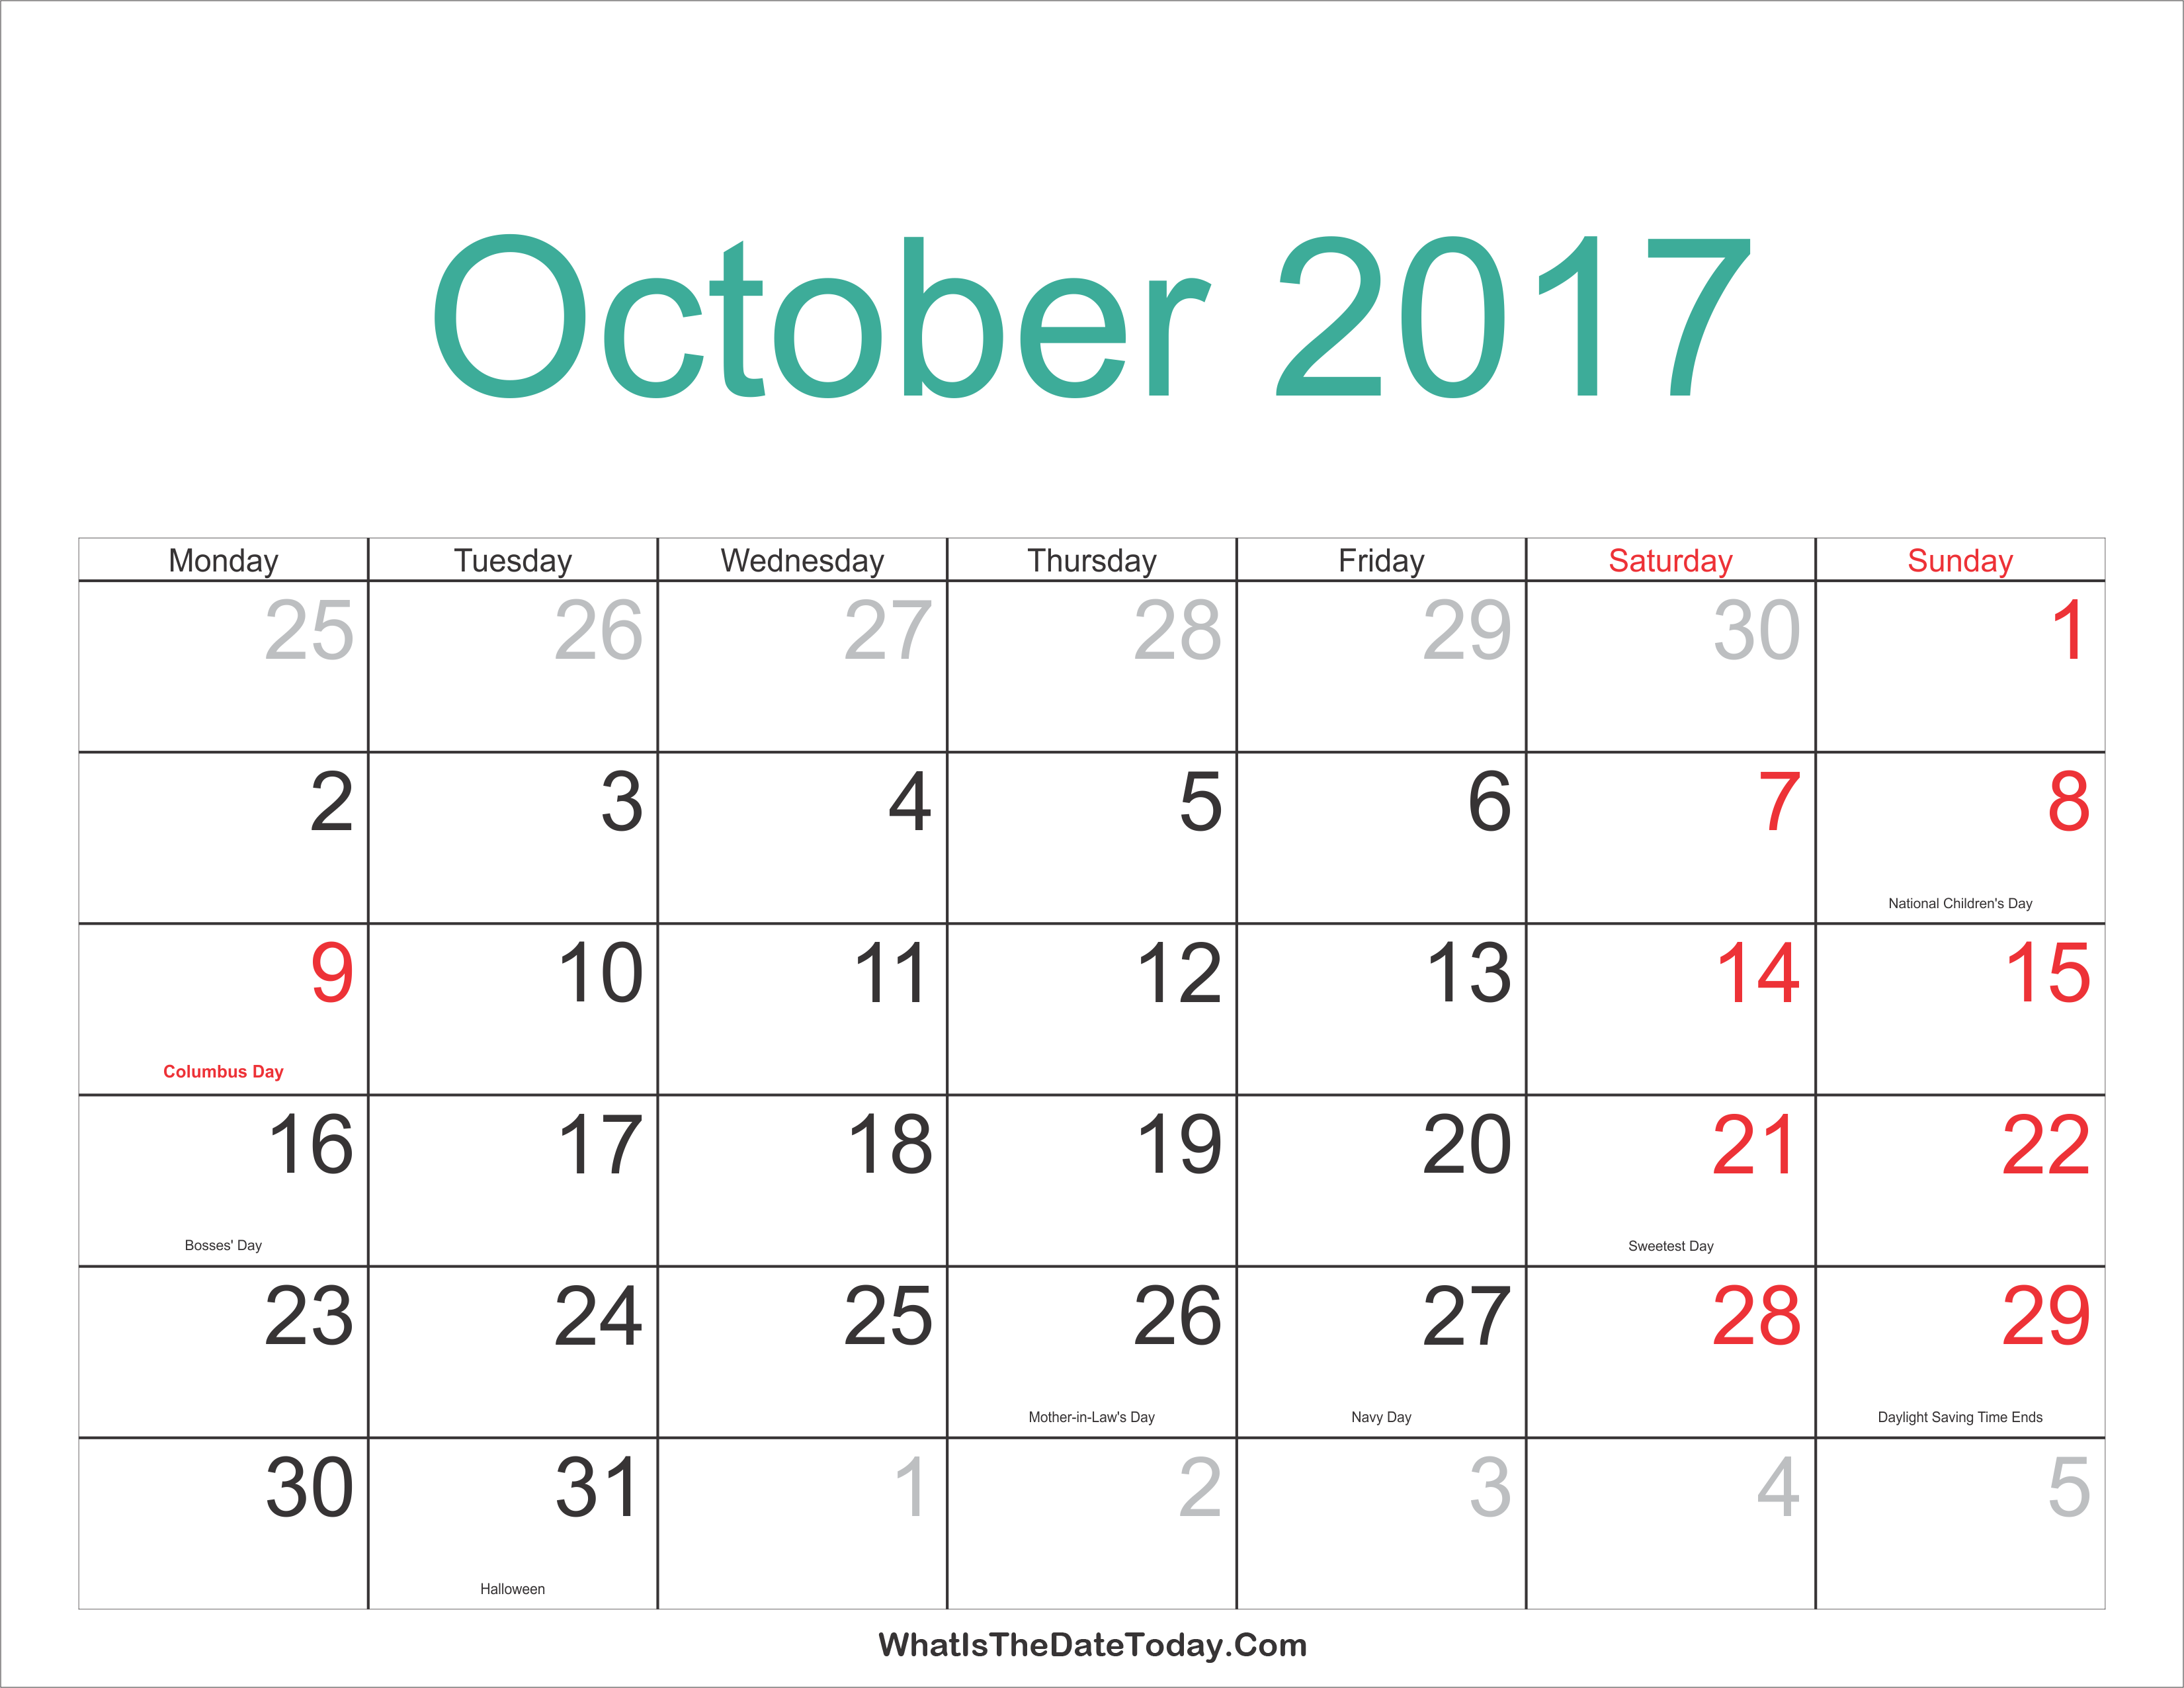 october-2017-calendar-printable-with-holidays-whatisthedatetoday-com